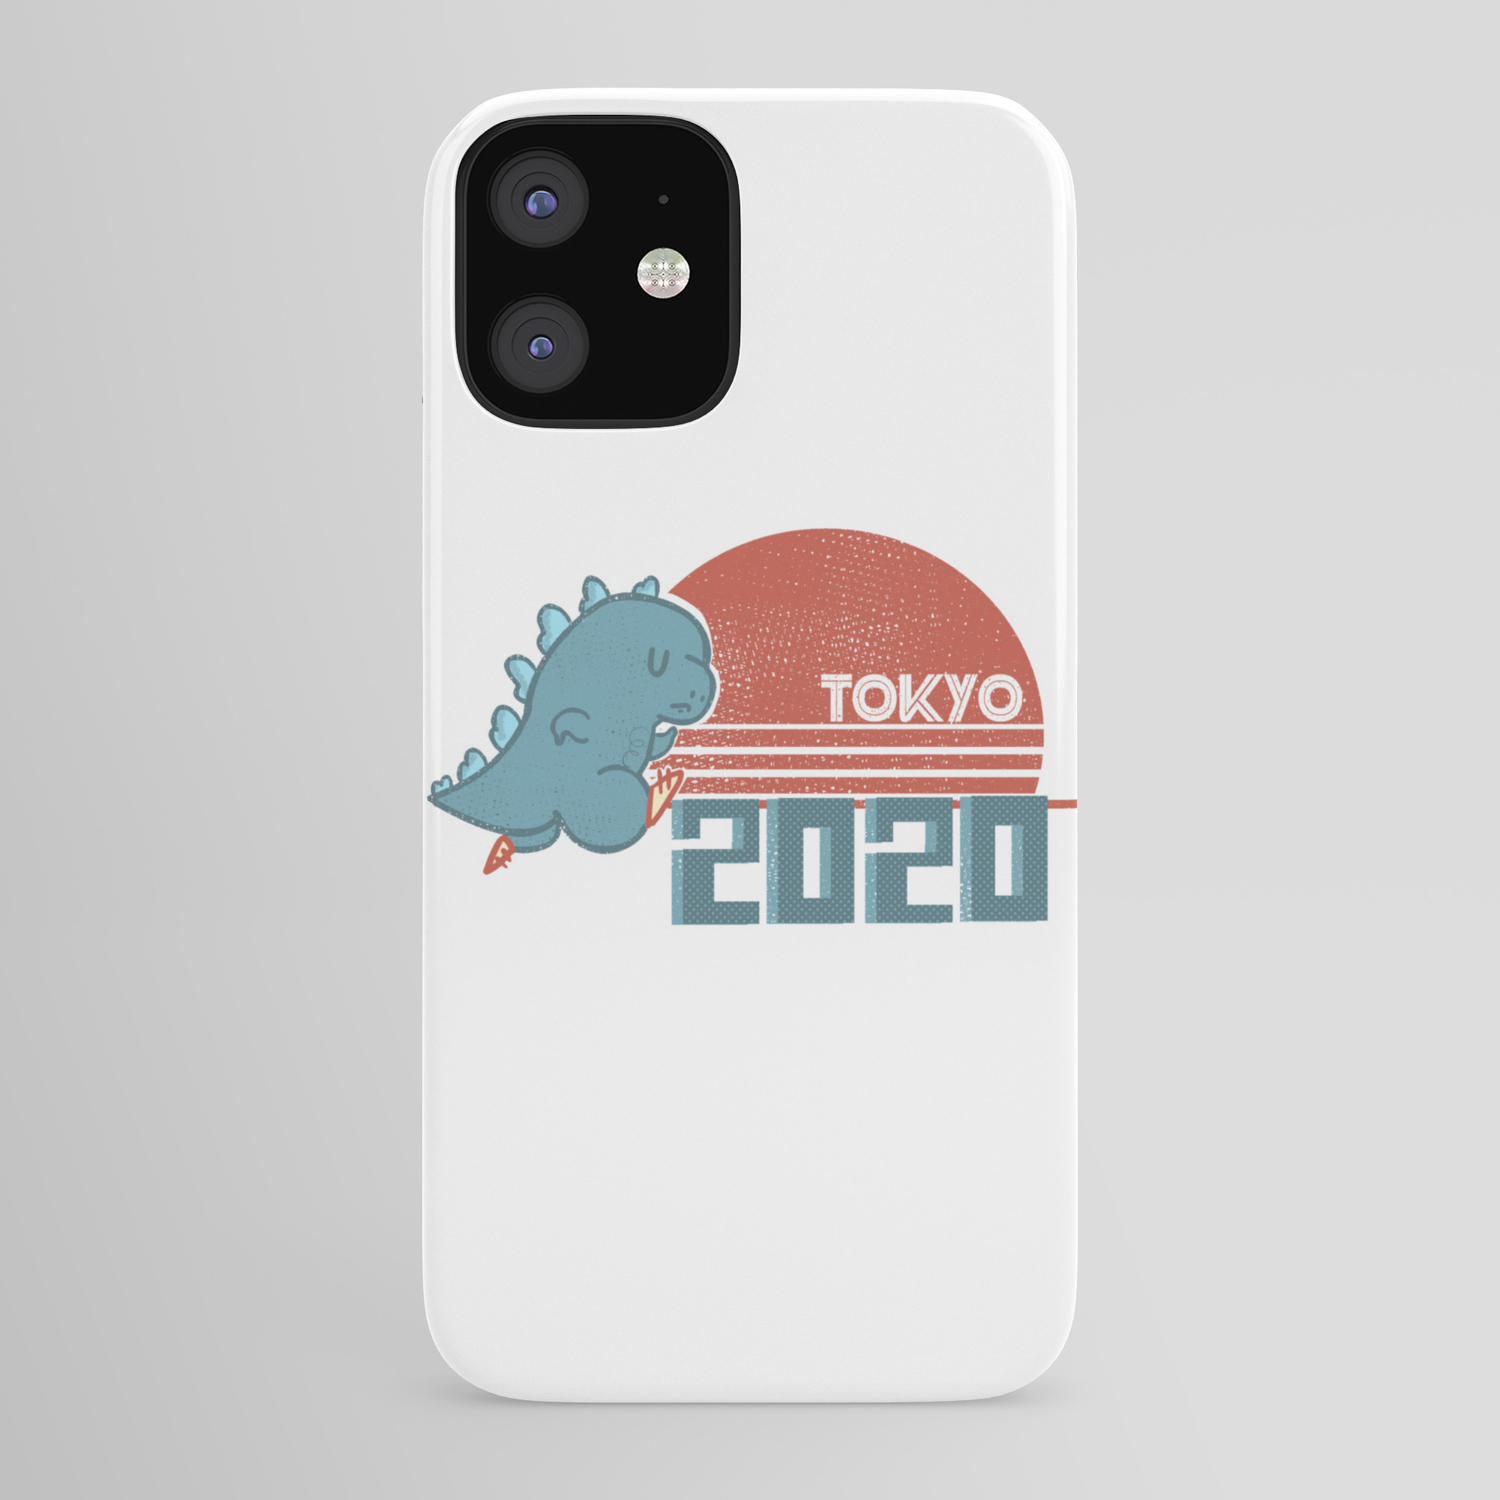 Tokyo 2020 iPhone Case by FluffyMafi | Society6